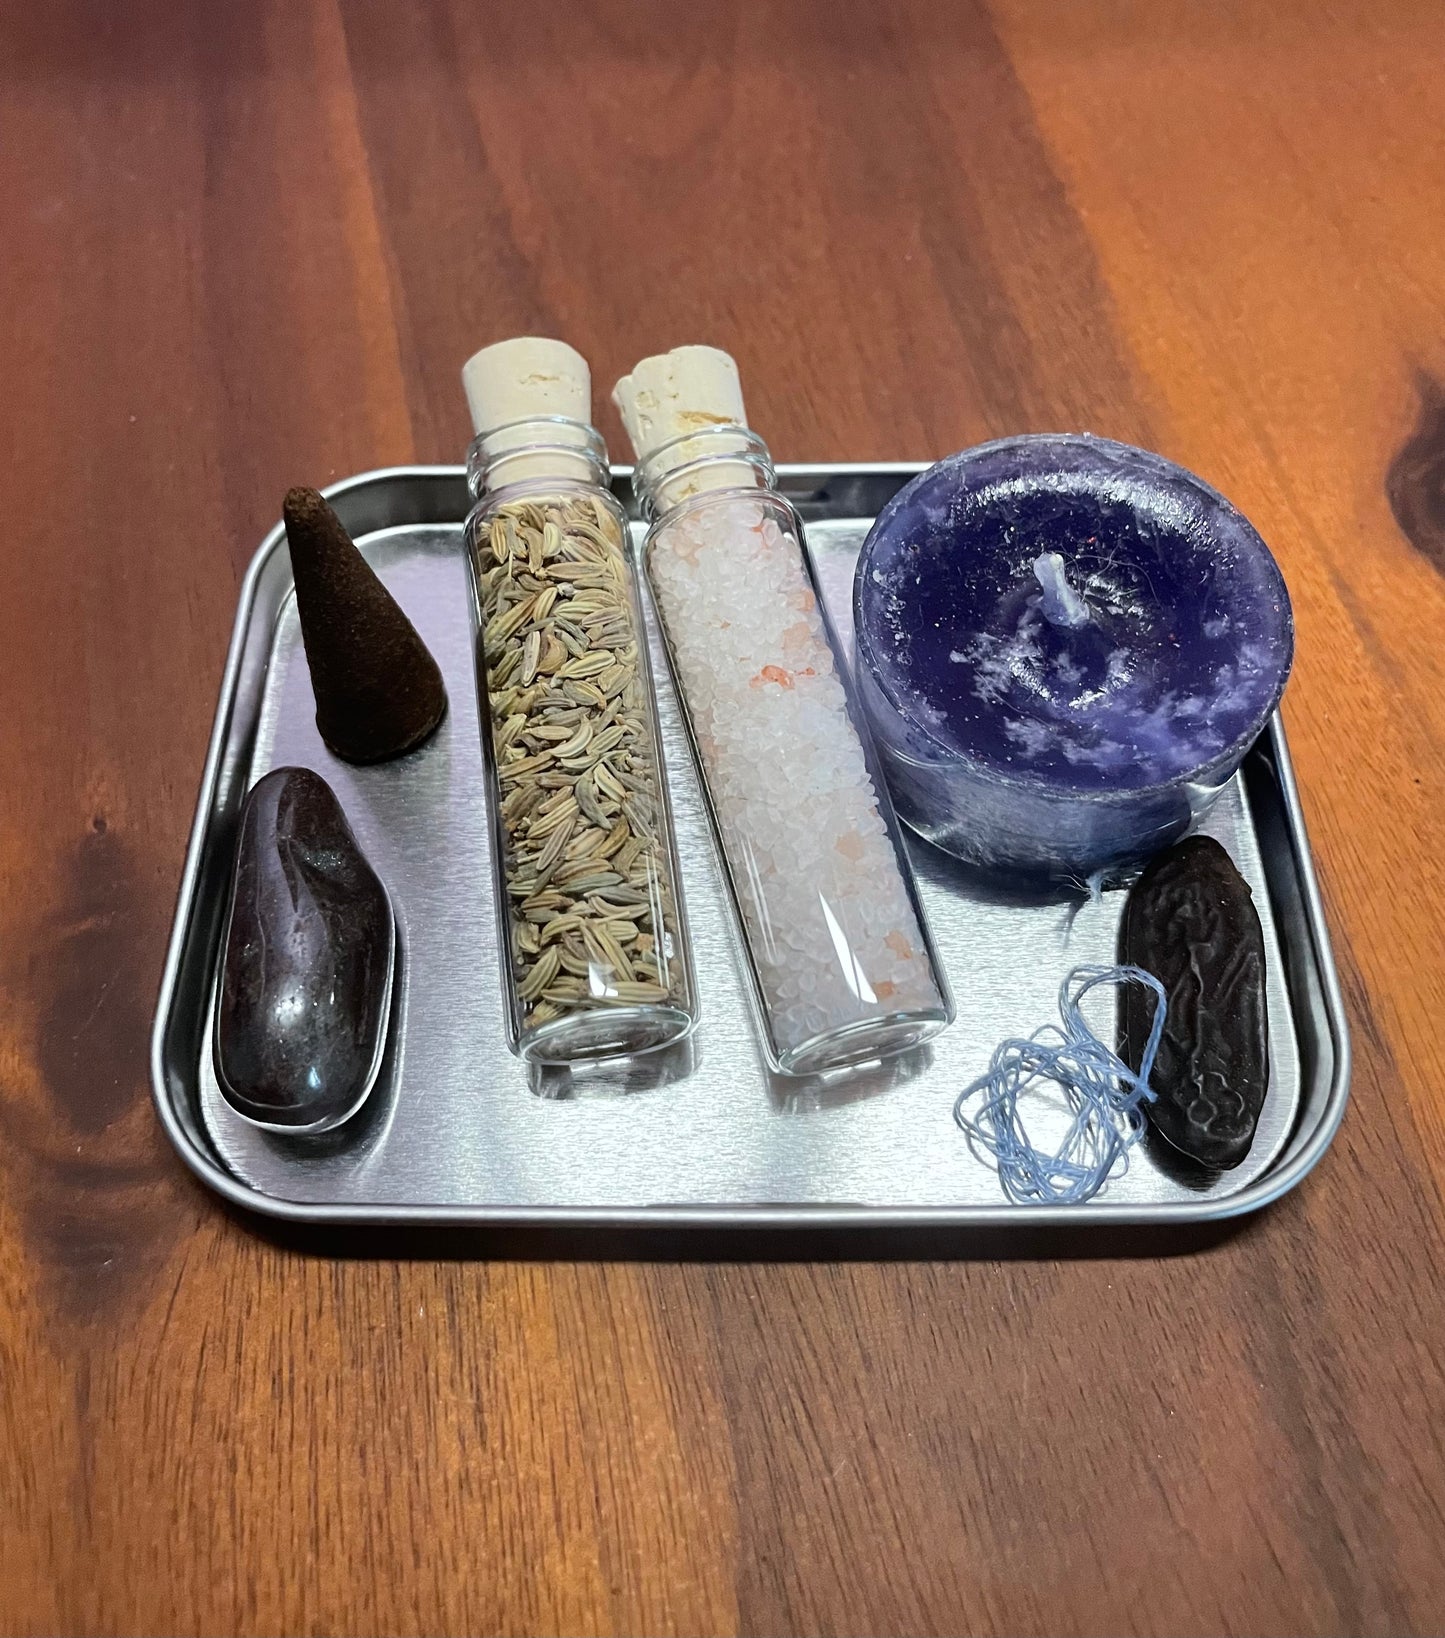 HEALING - Travel Altar Kit